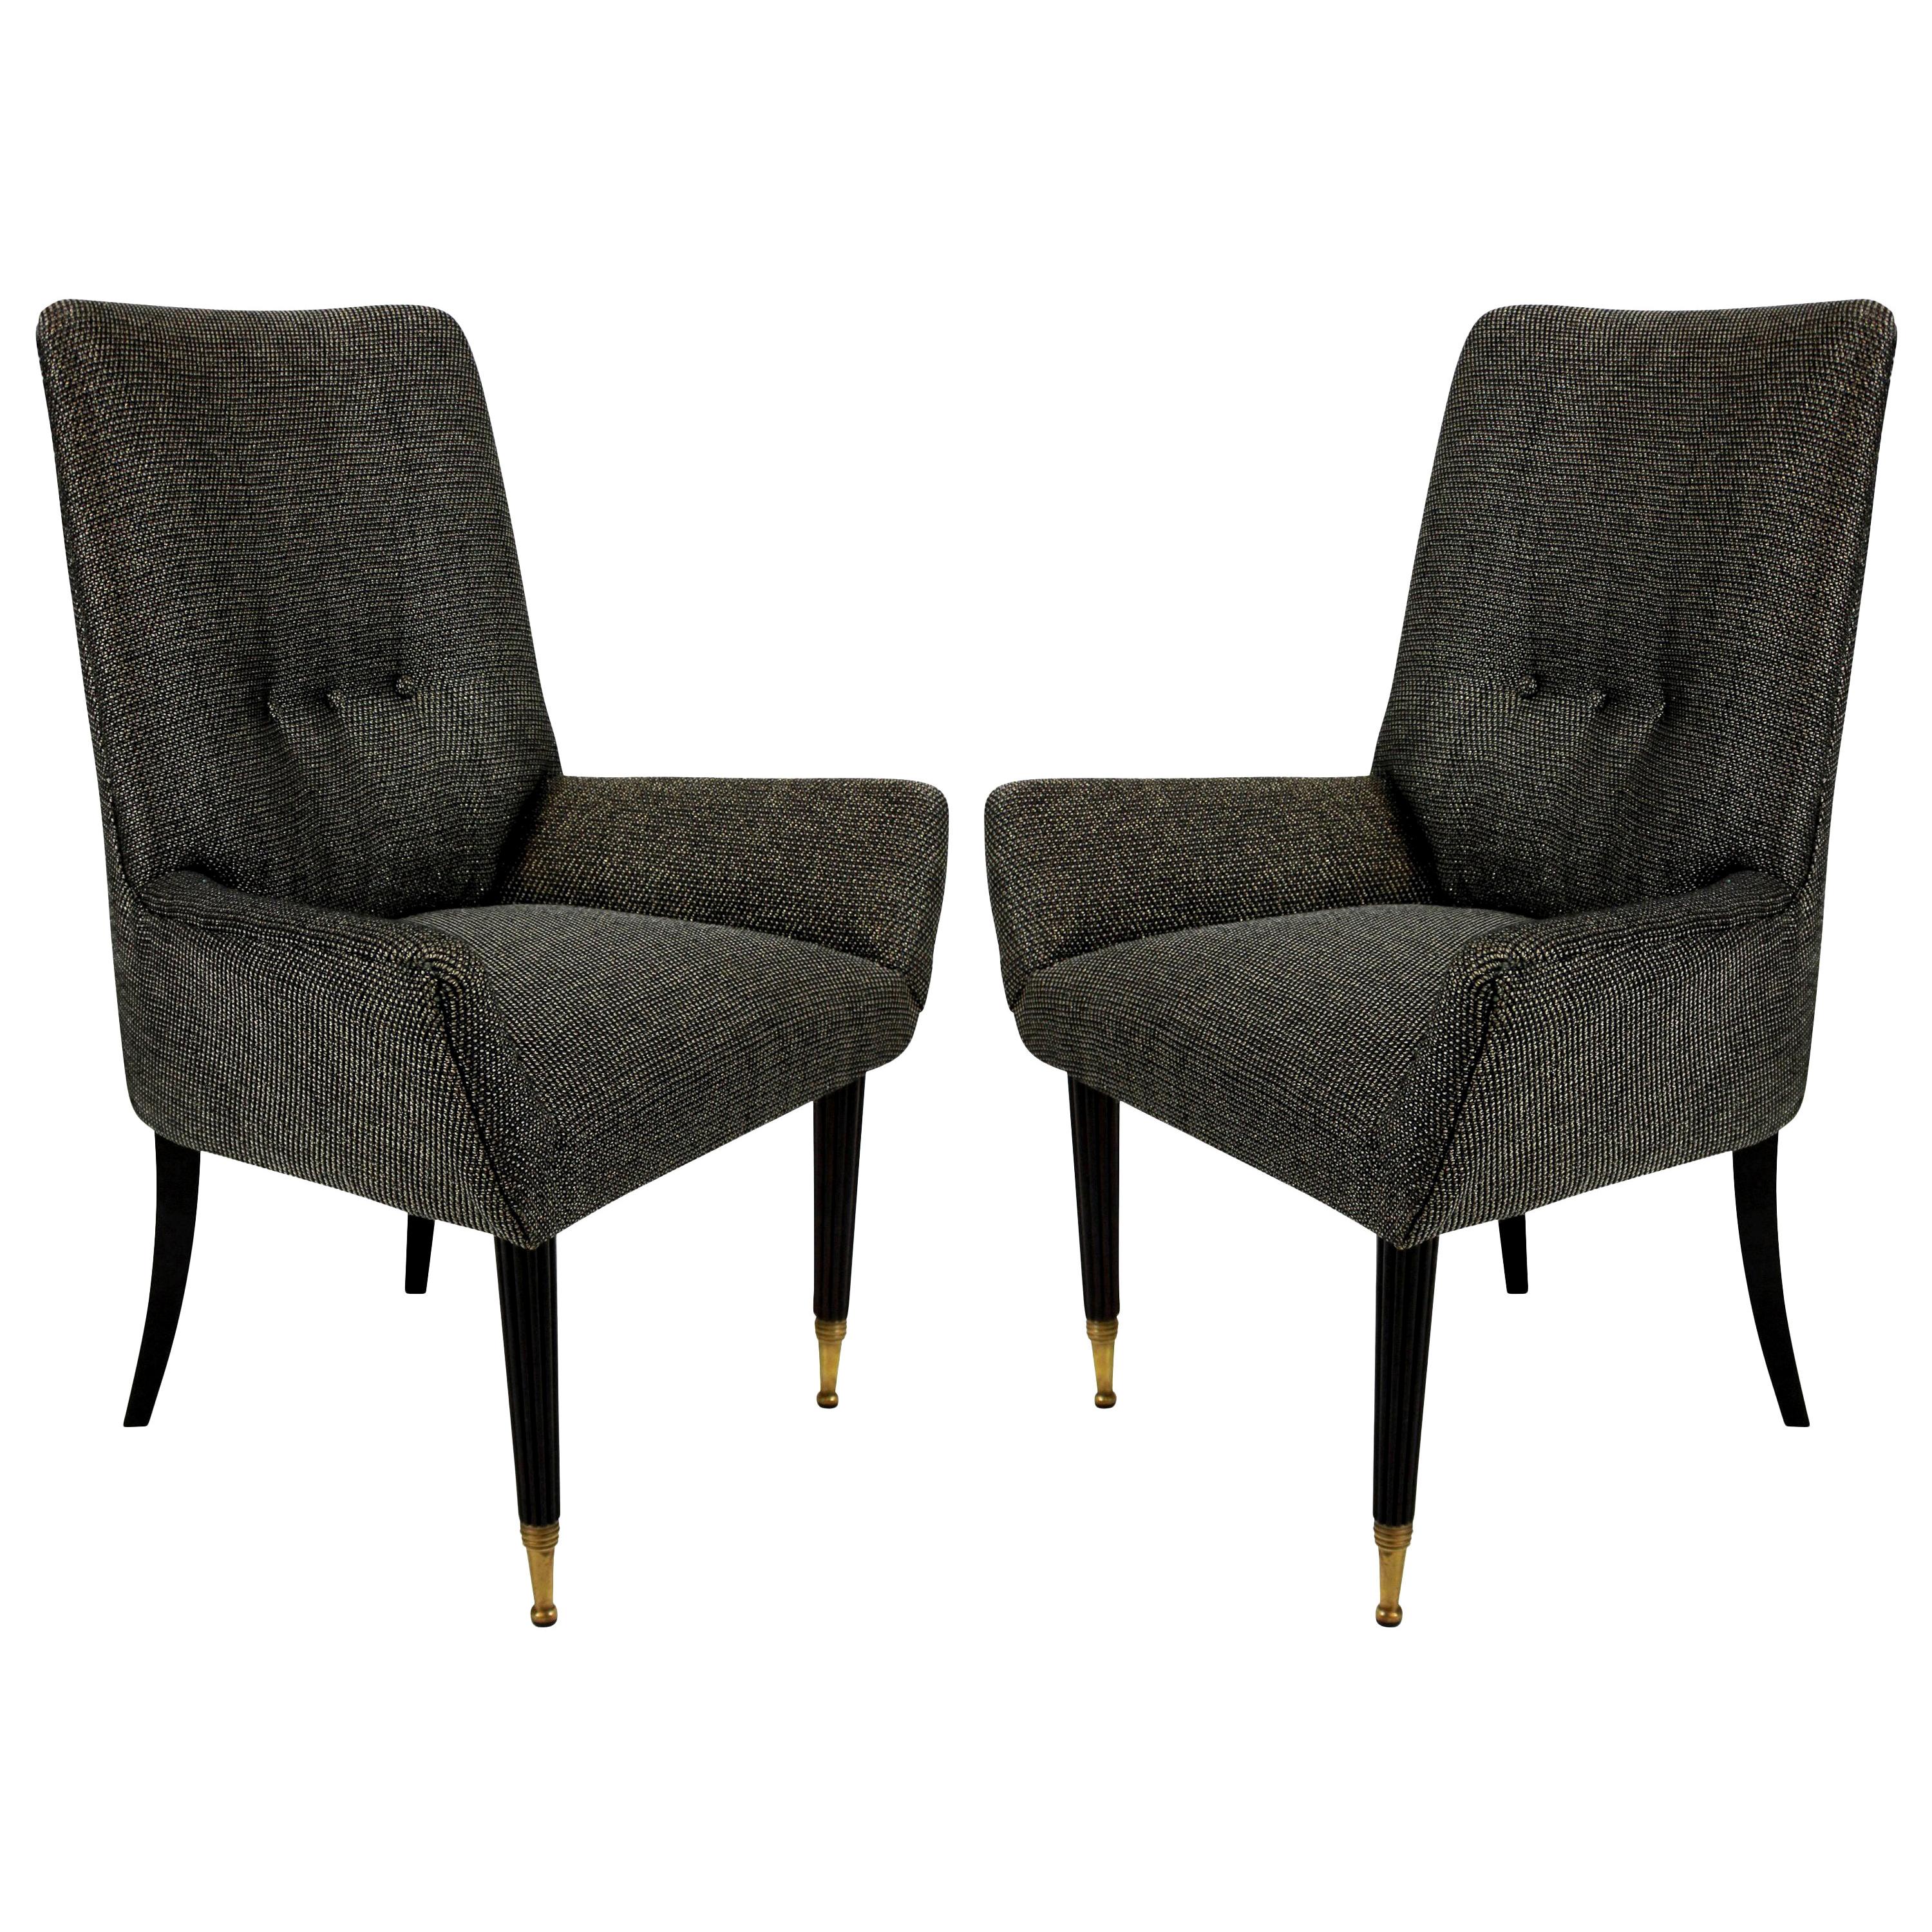 Pair of Stylish Italian Bedroom Chairs